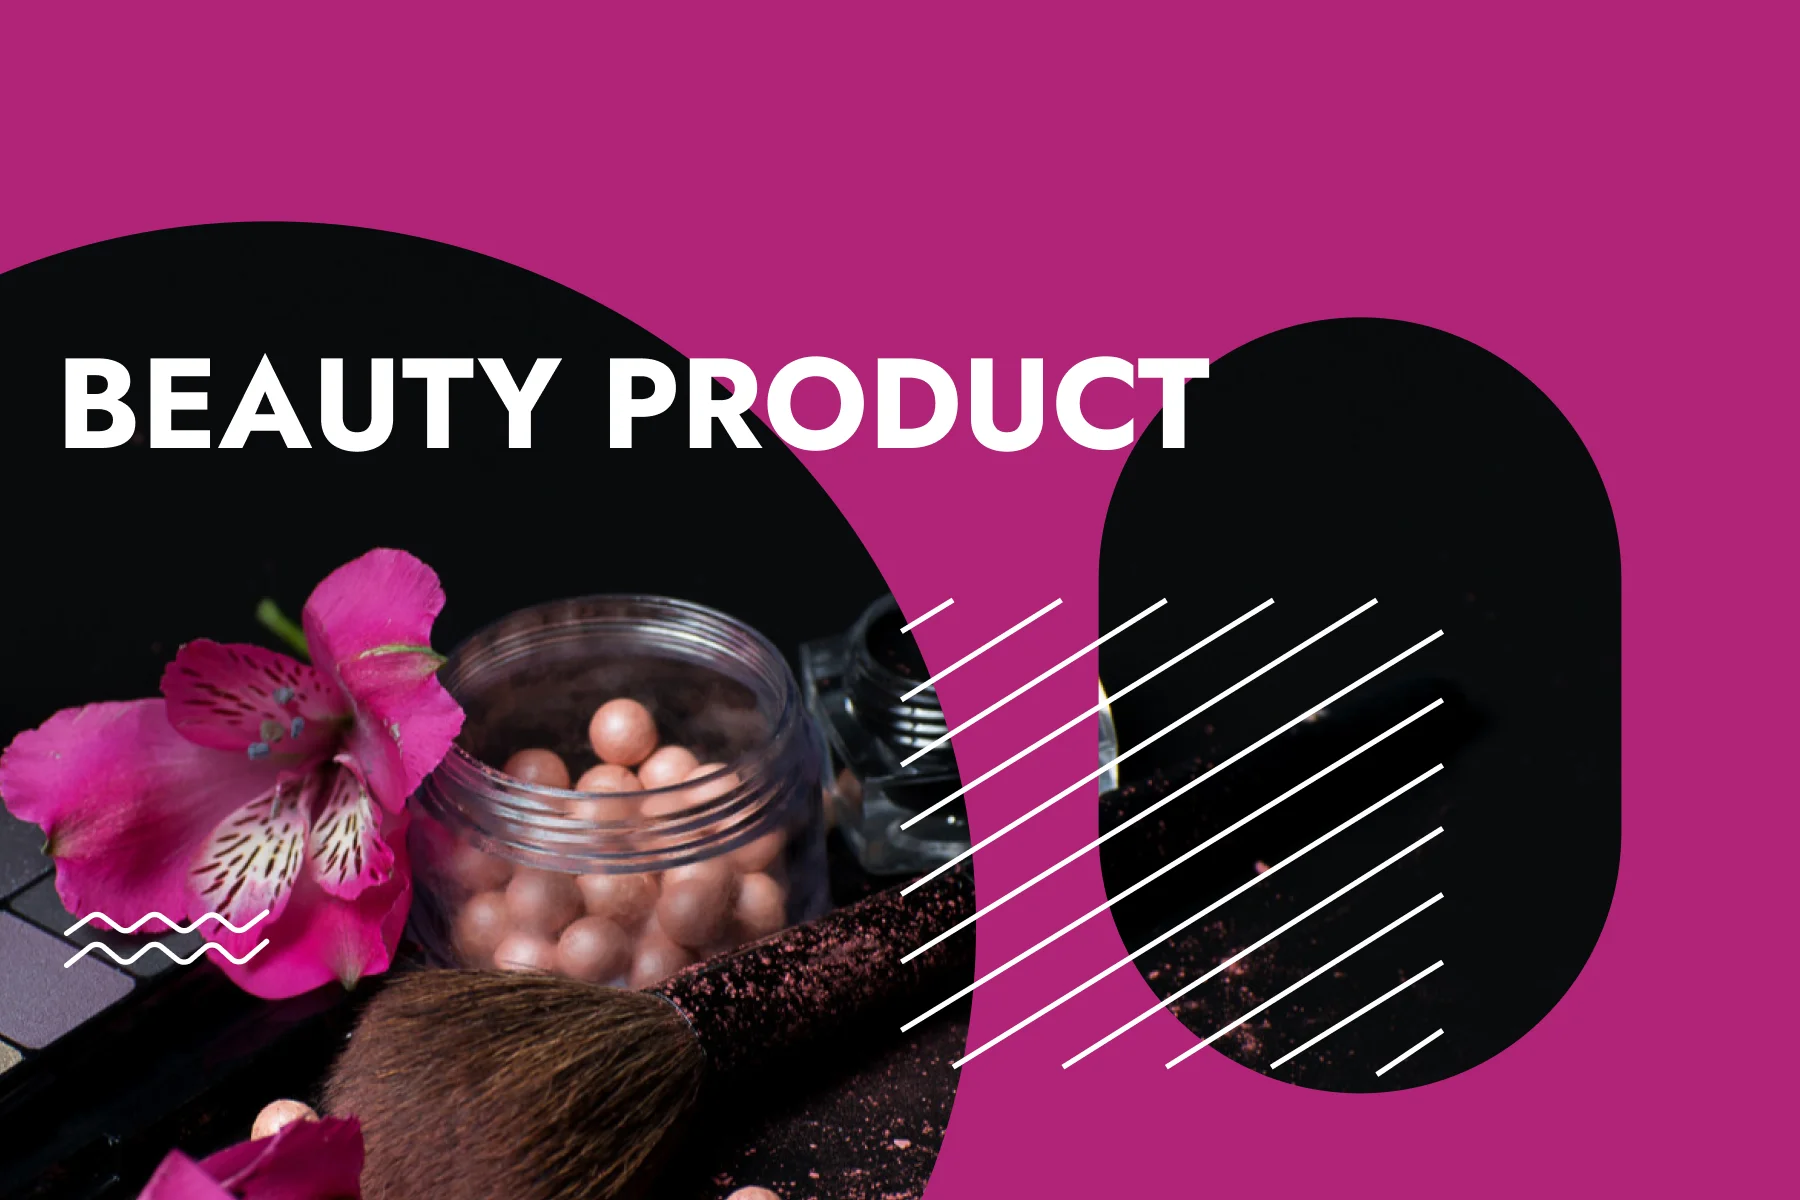 Beauty product photography ideas